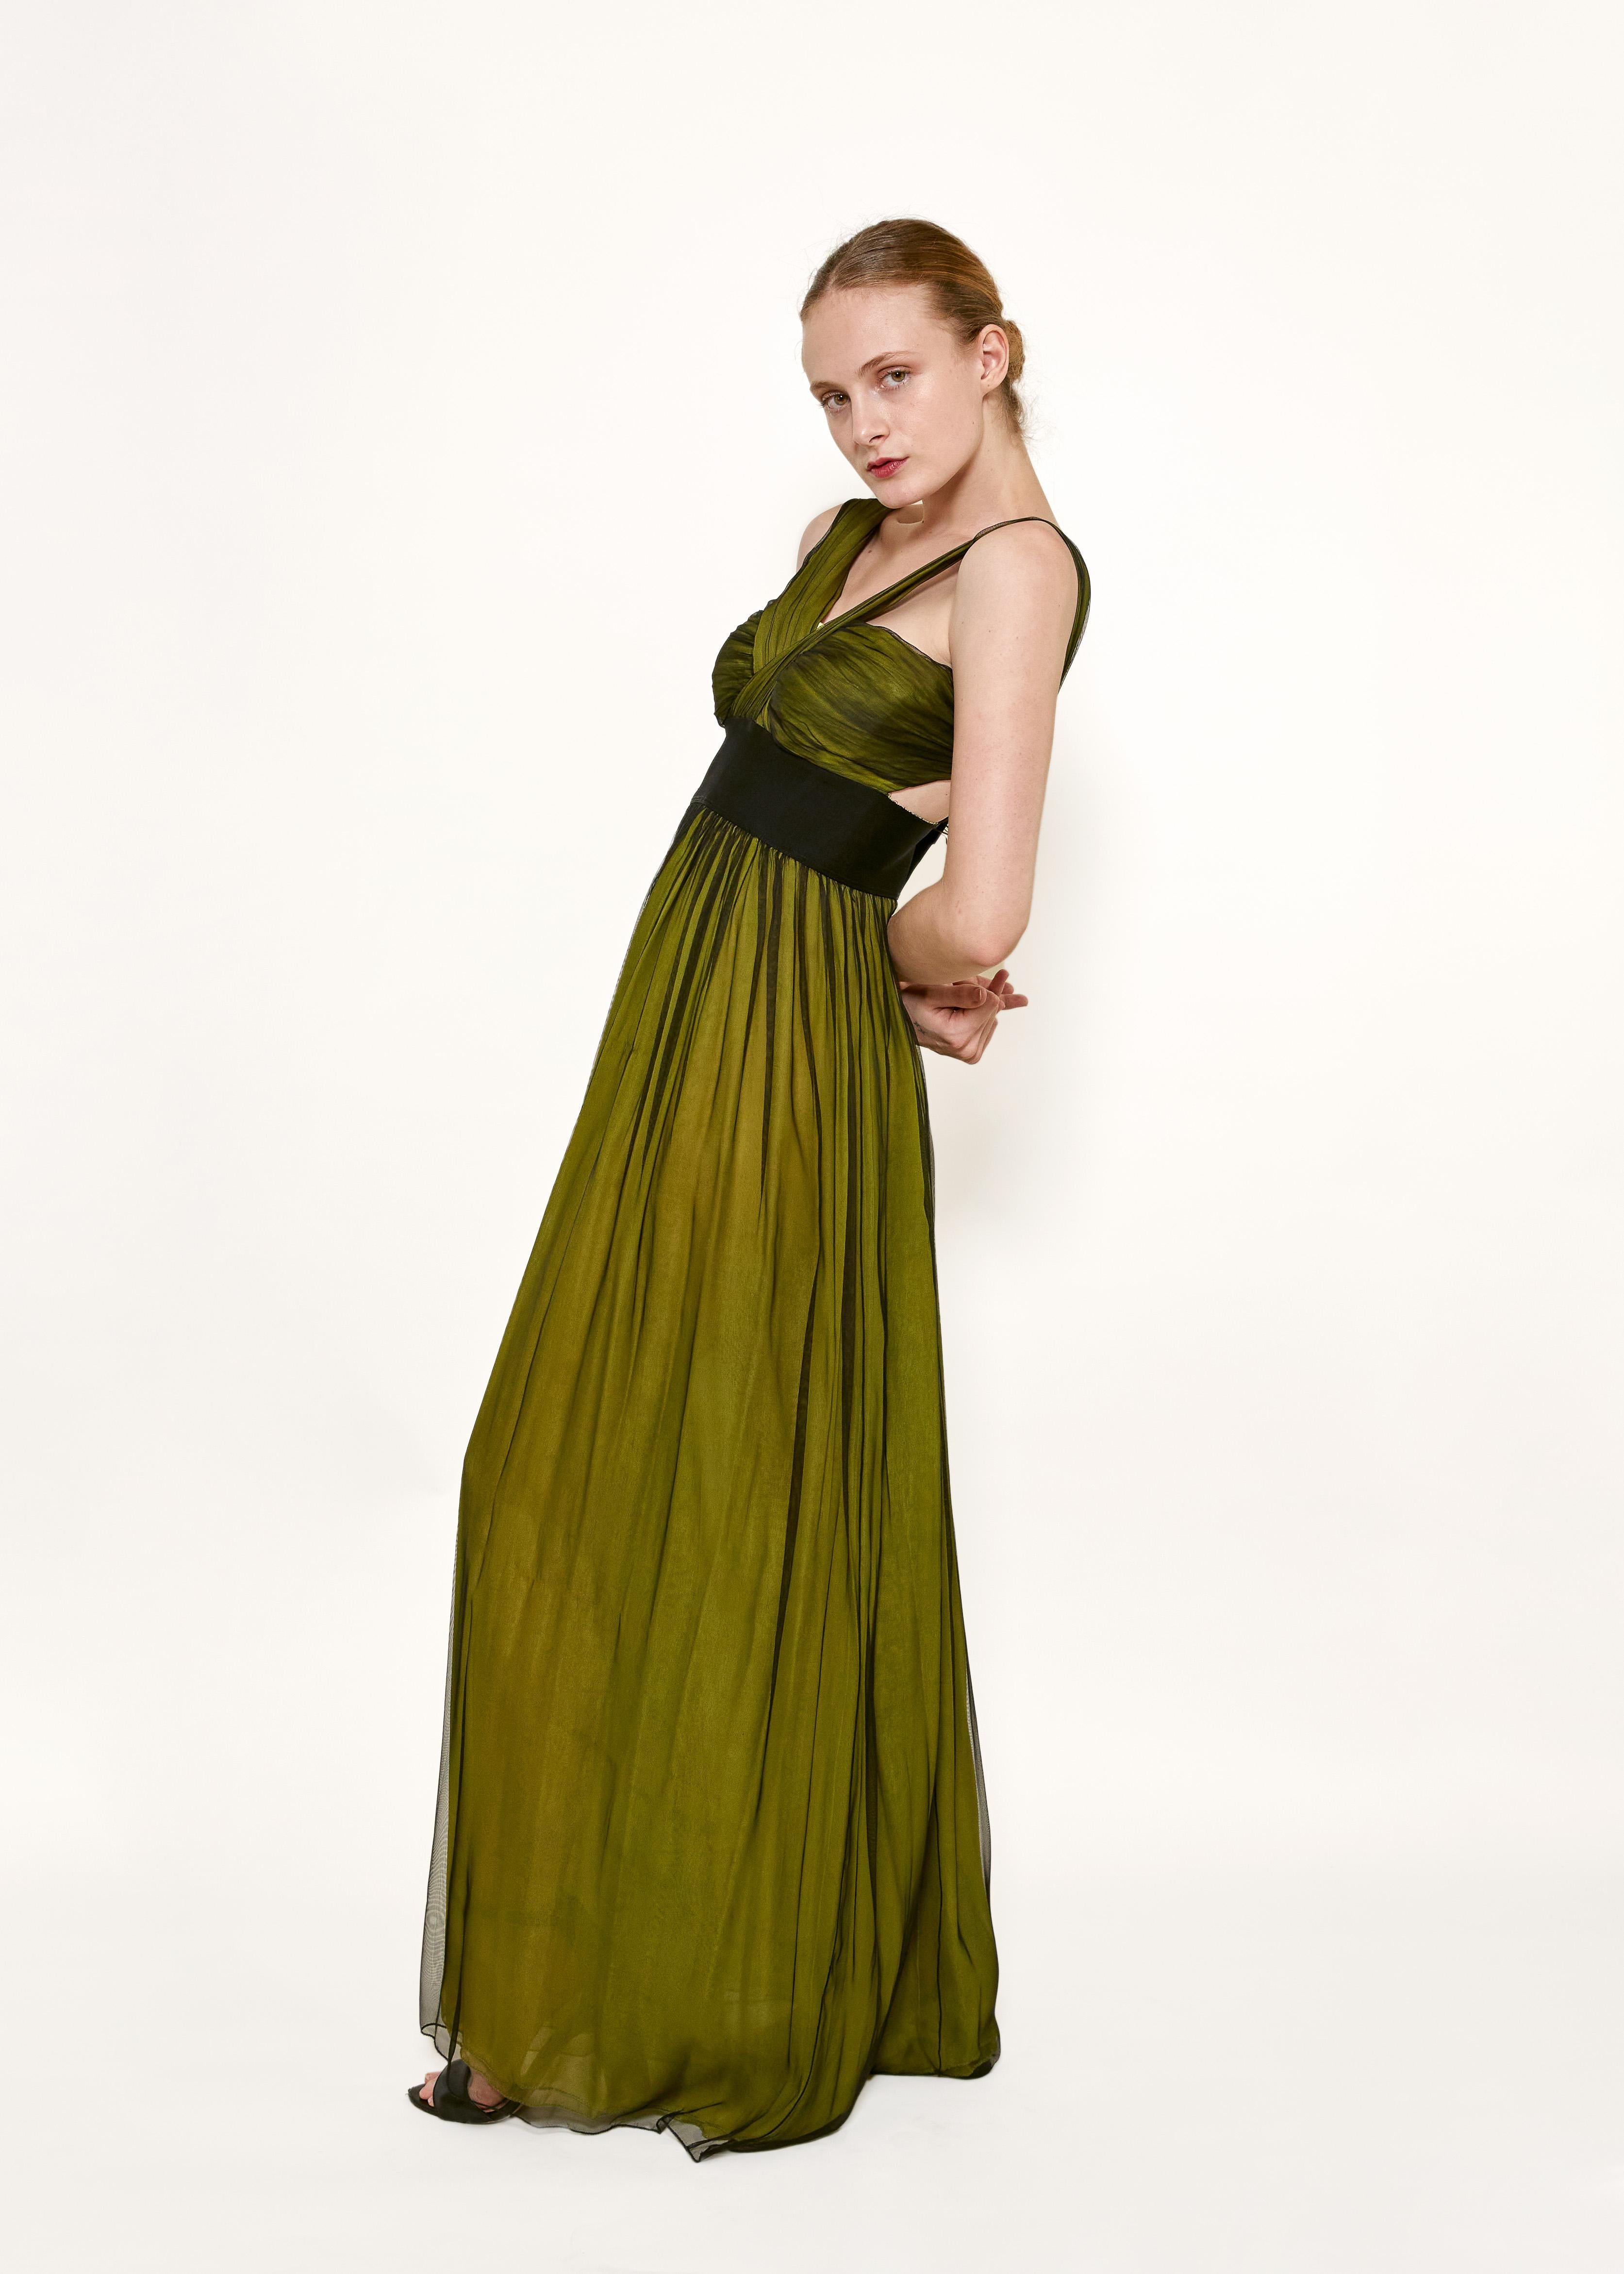 Women's Dolce & Gabbana Green/Black Cross-Front Chiffon Gown For Sale